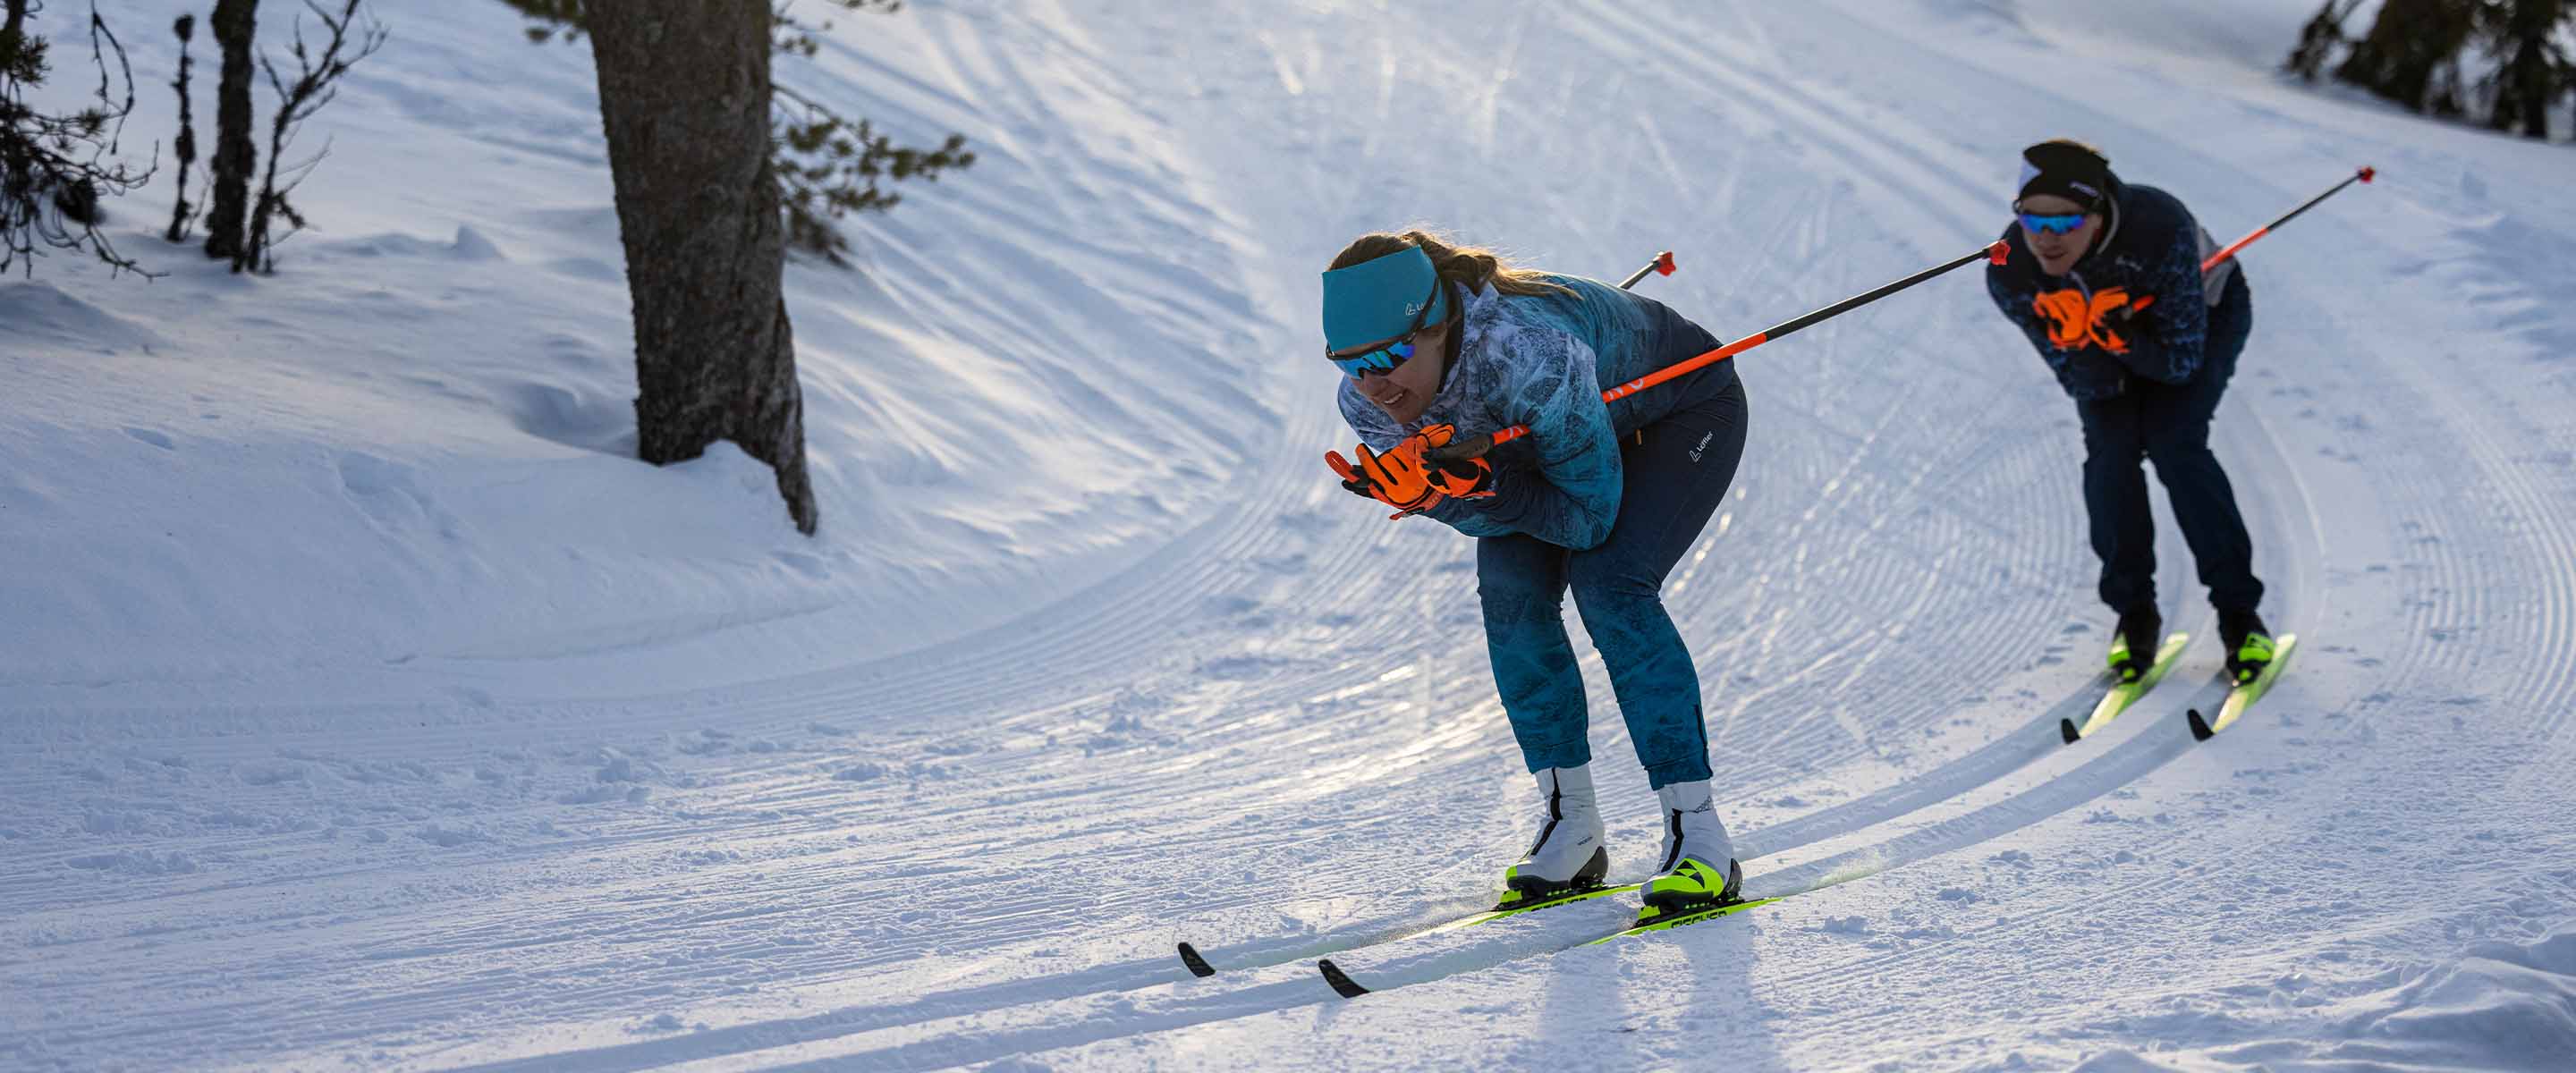 Fartage ski de fond - tous nos conseils pour farter vos…